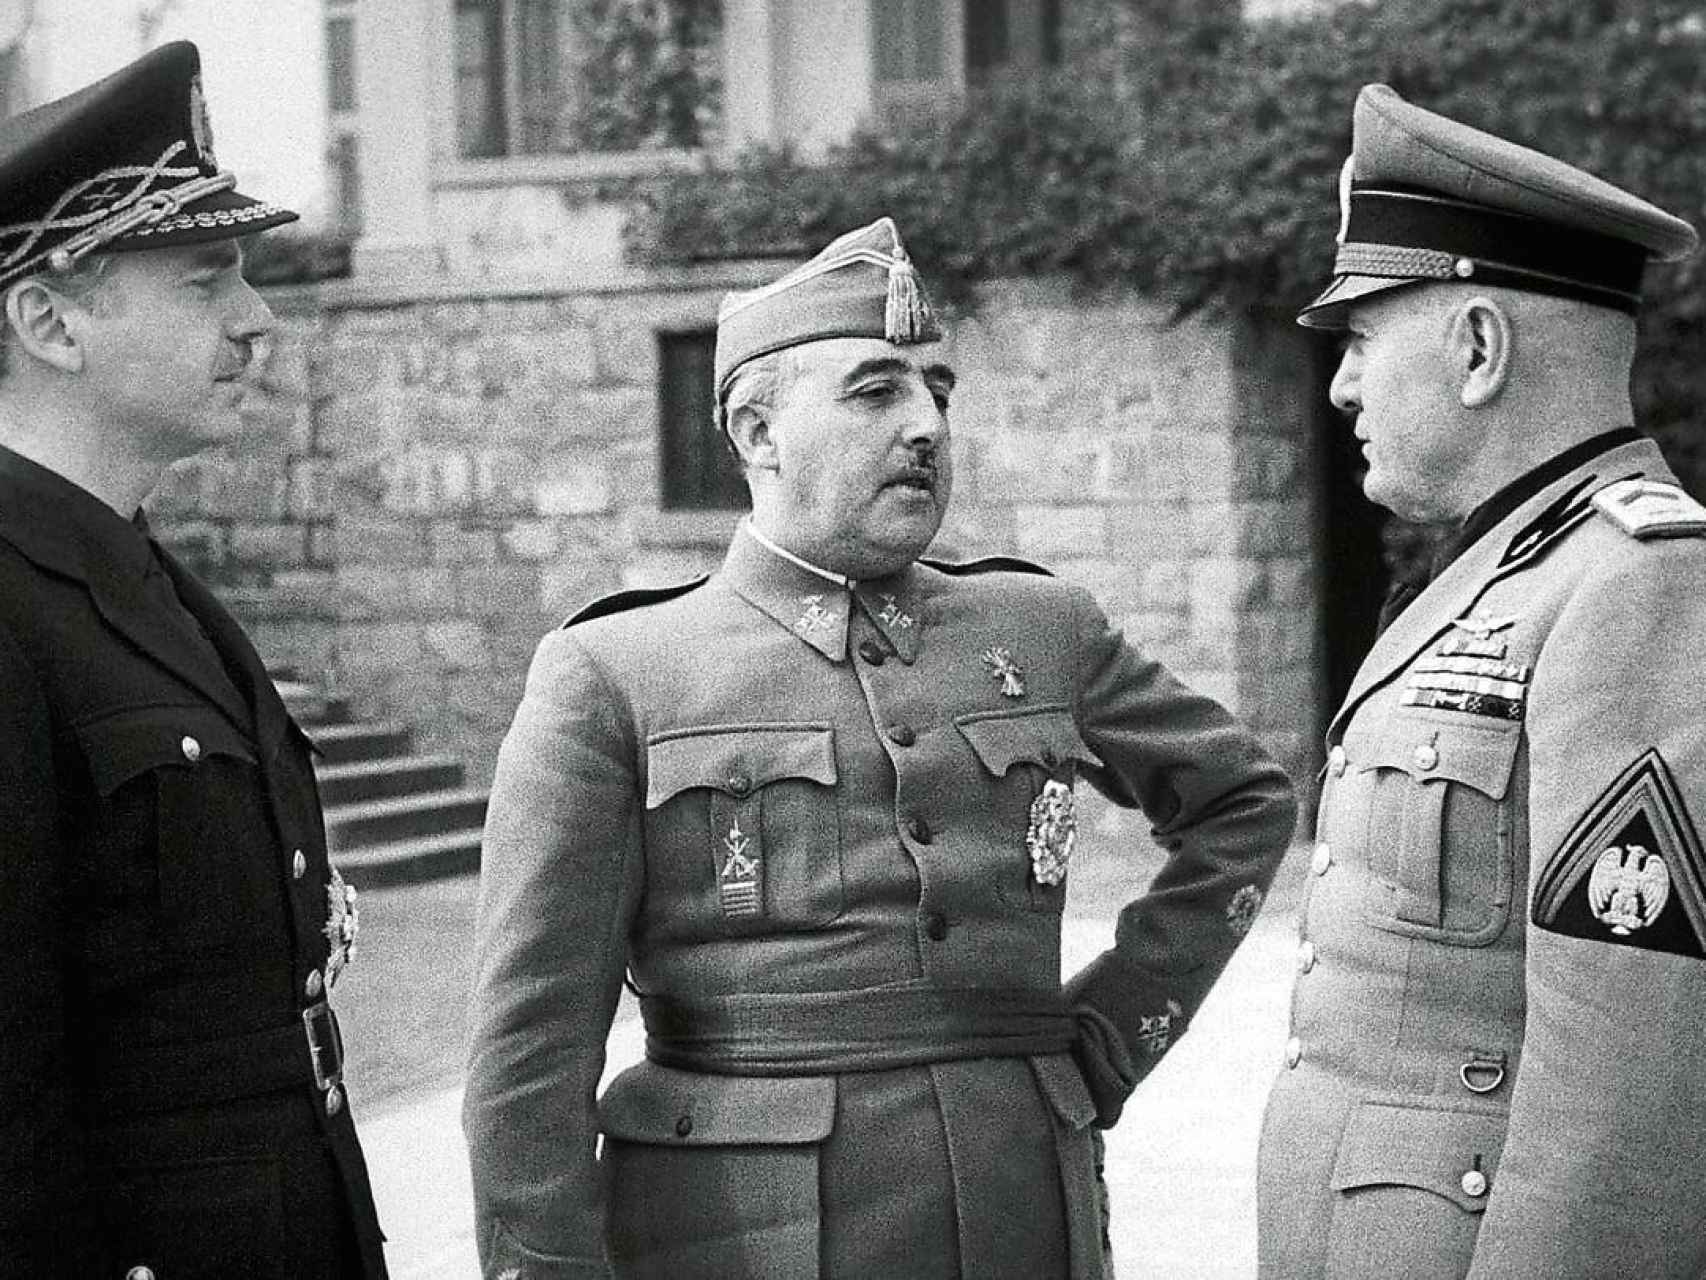 Serrano Suñer, creador del tribunal represor, Francisco Franco y Benito Mussolini.